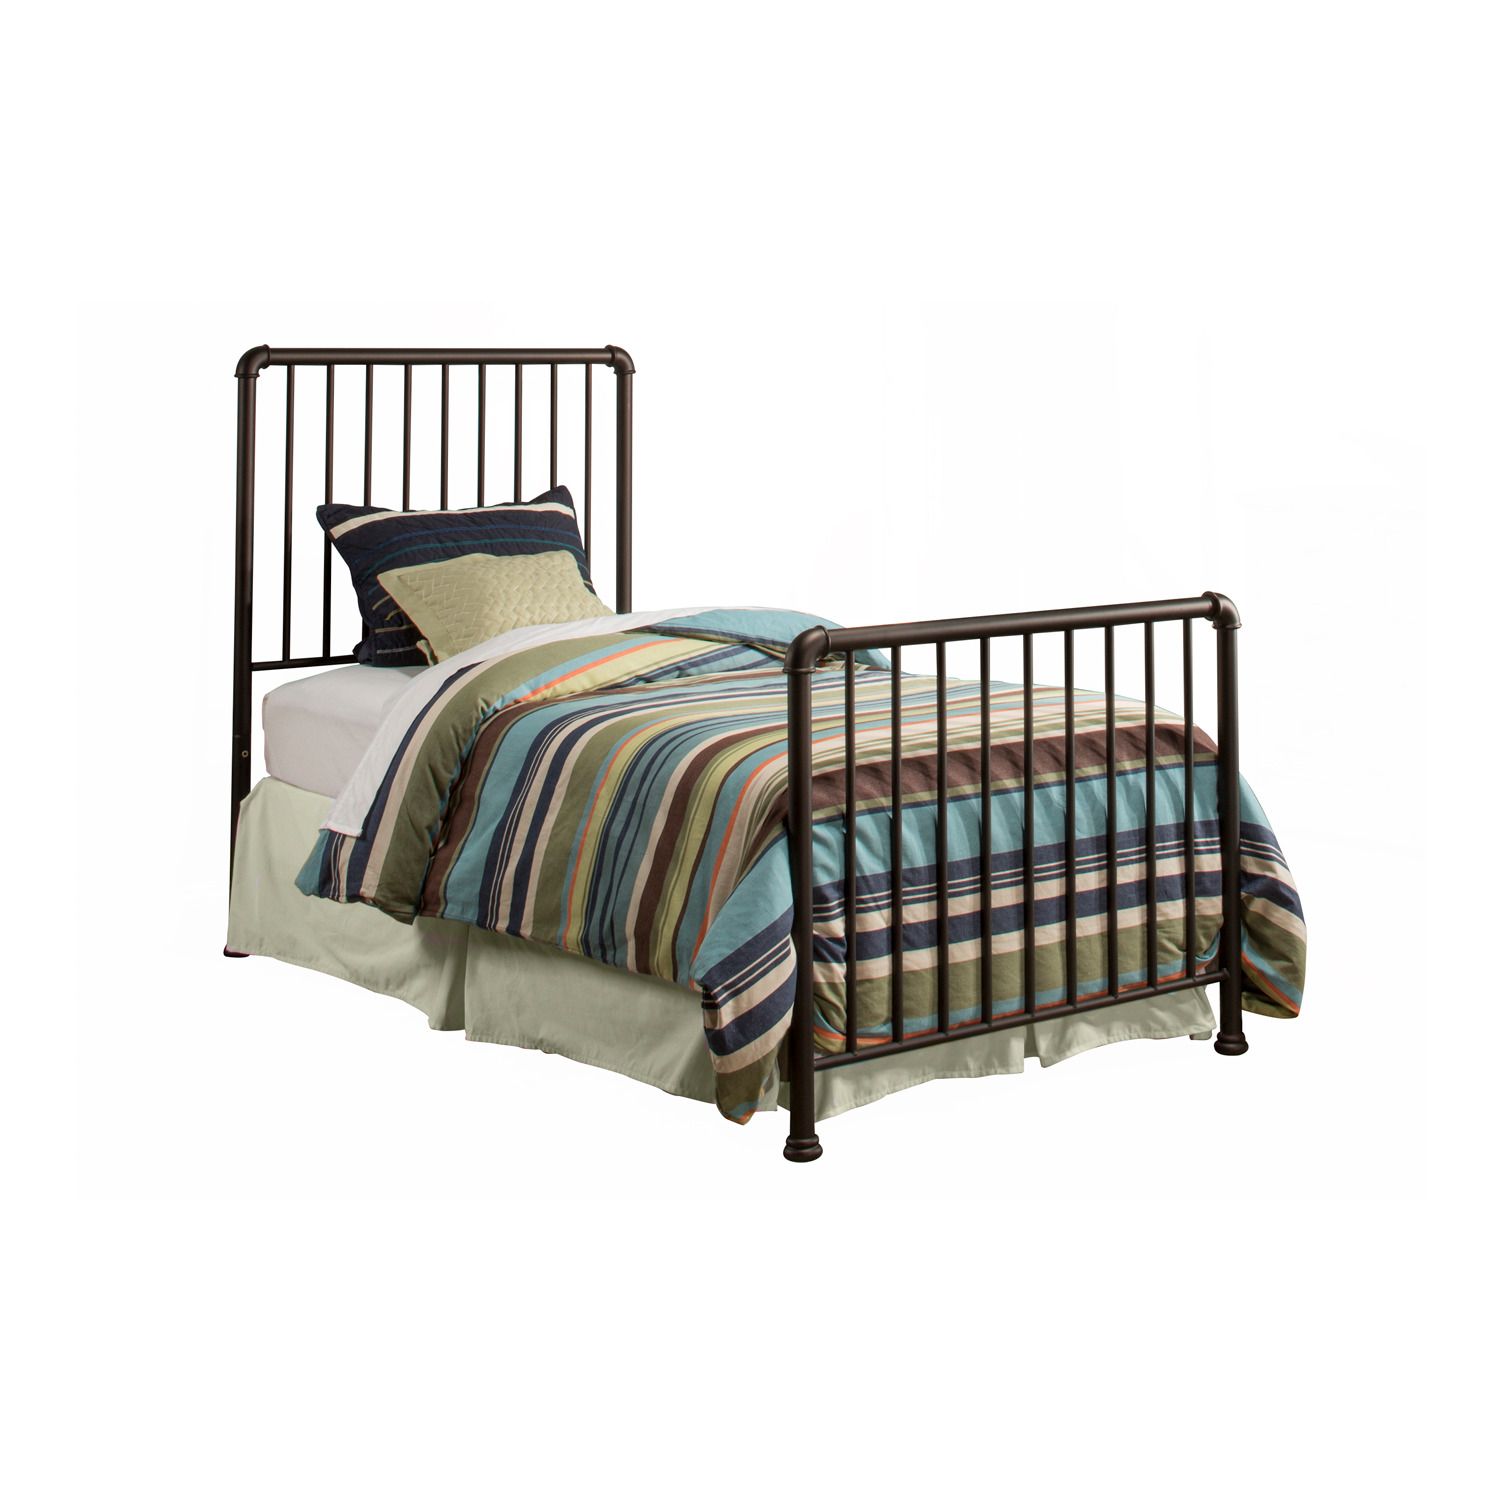 Image for Hillsdale Furniture Brandi Bed Set with Bed Frame at Kohl's.